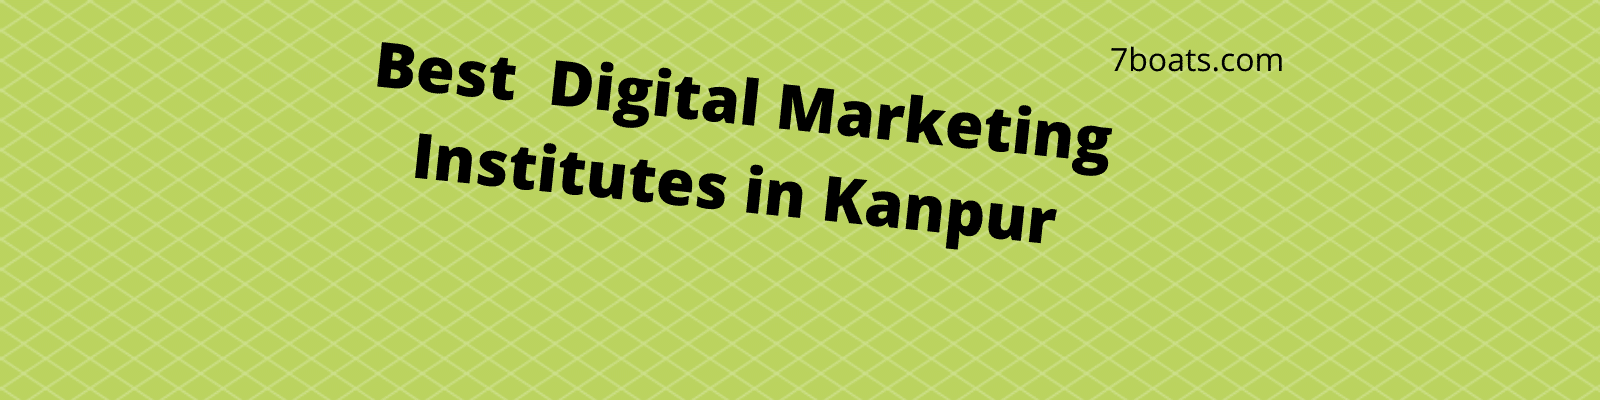 Popular Digital Marketing Training Institutes in Kanpur – Top Digital Marketing Courses in Kanpur